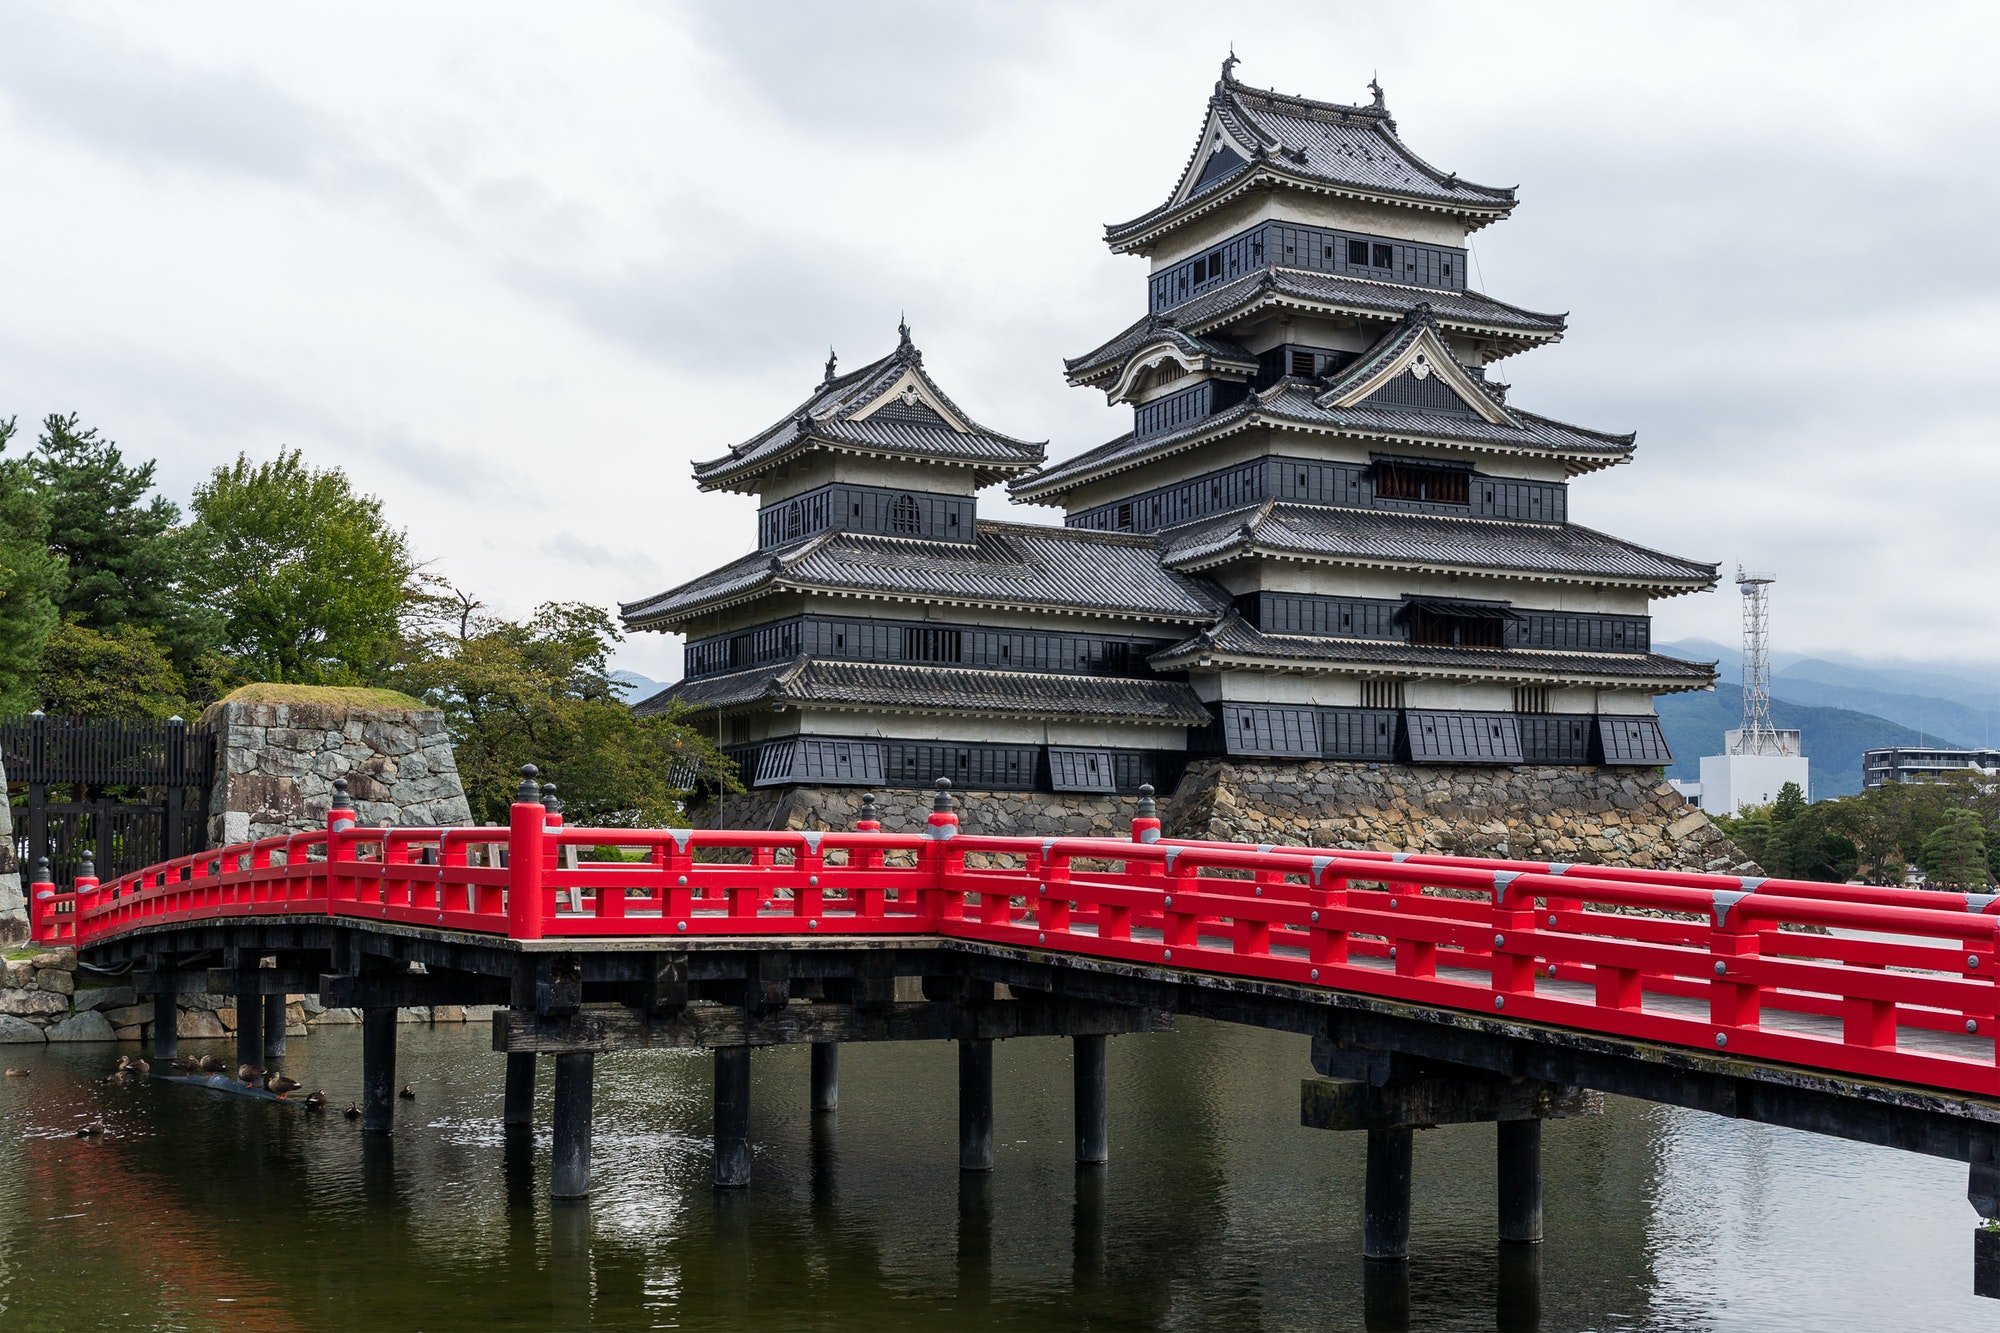 Matsumoto Castle and bridge in Japan